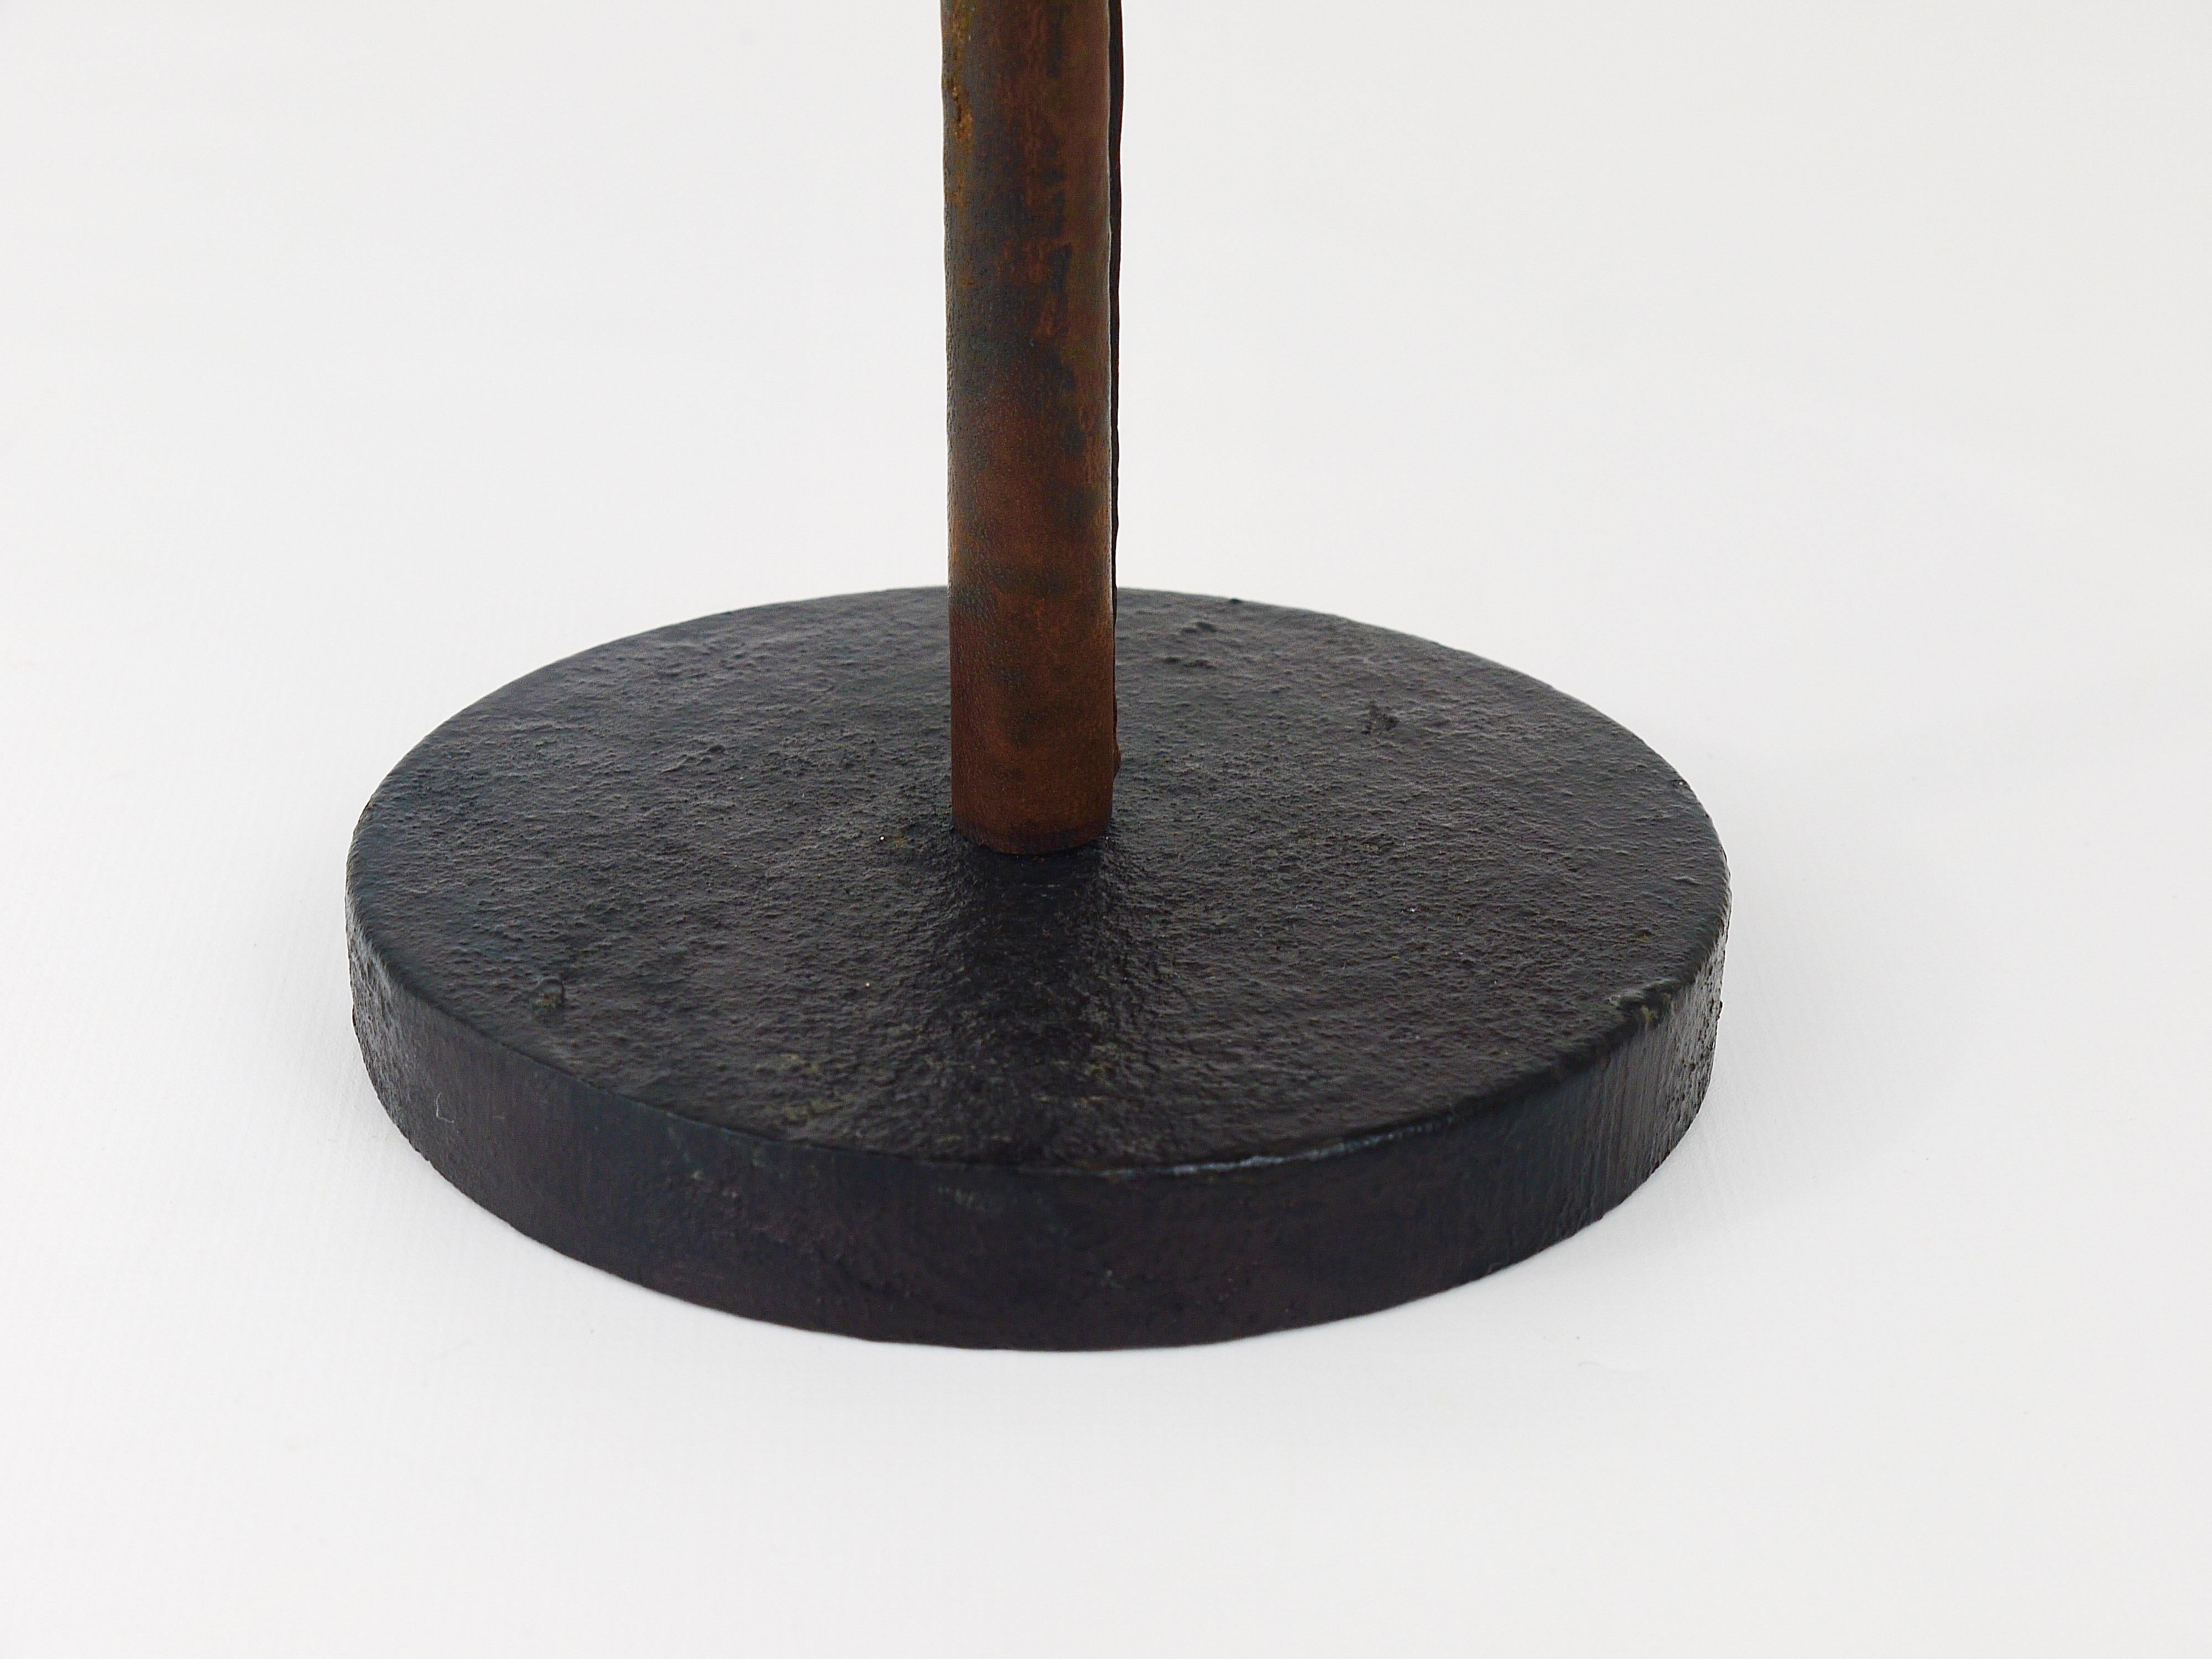 Metal Carl Aubock Modernist Walnut Leather Candlestick Candle Holder, Austria, 1950s For Sale